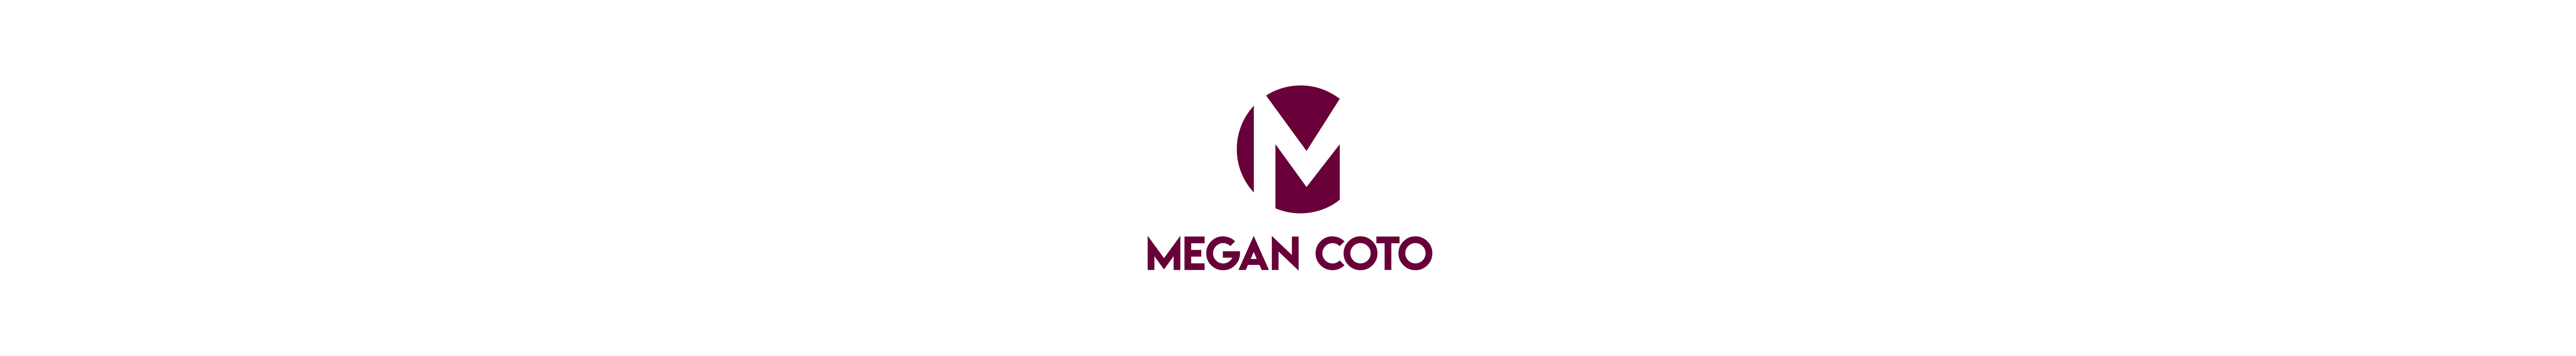 Baner profilu użytkownika Megan Coto